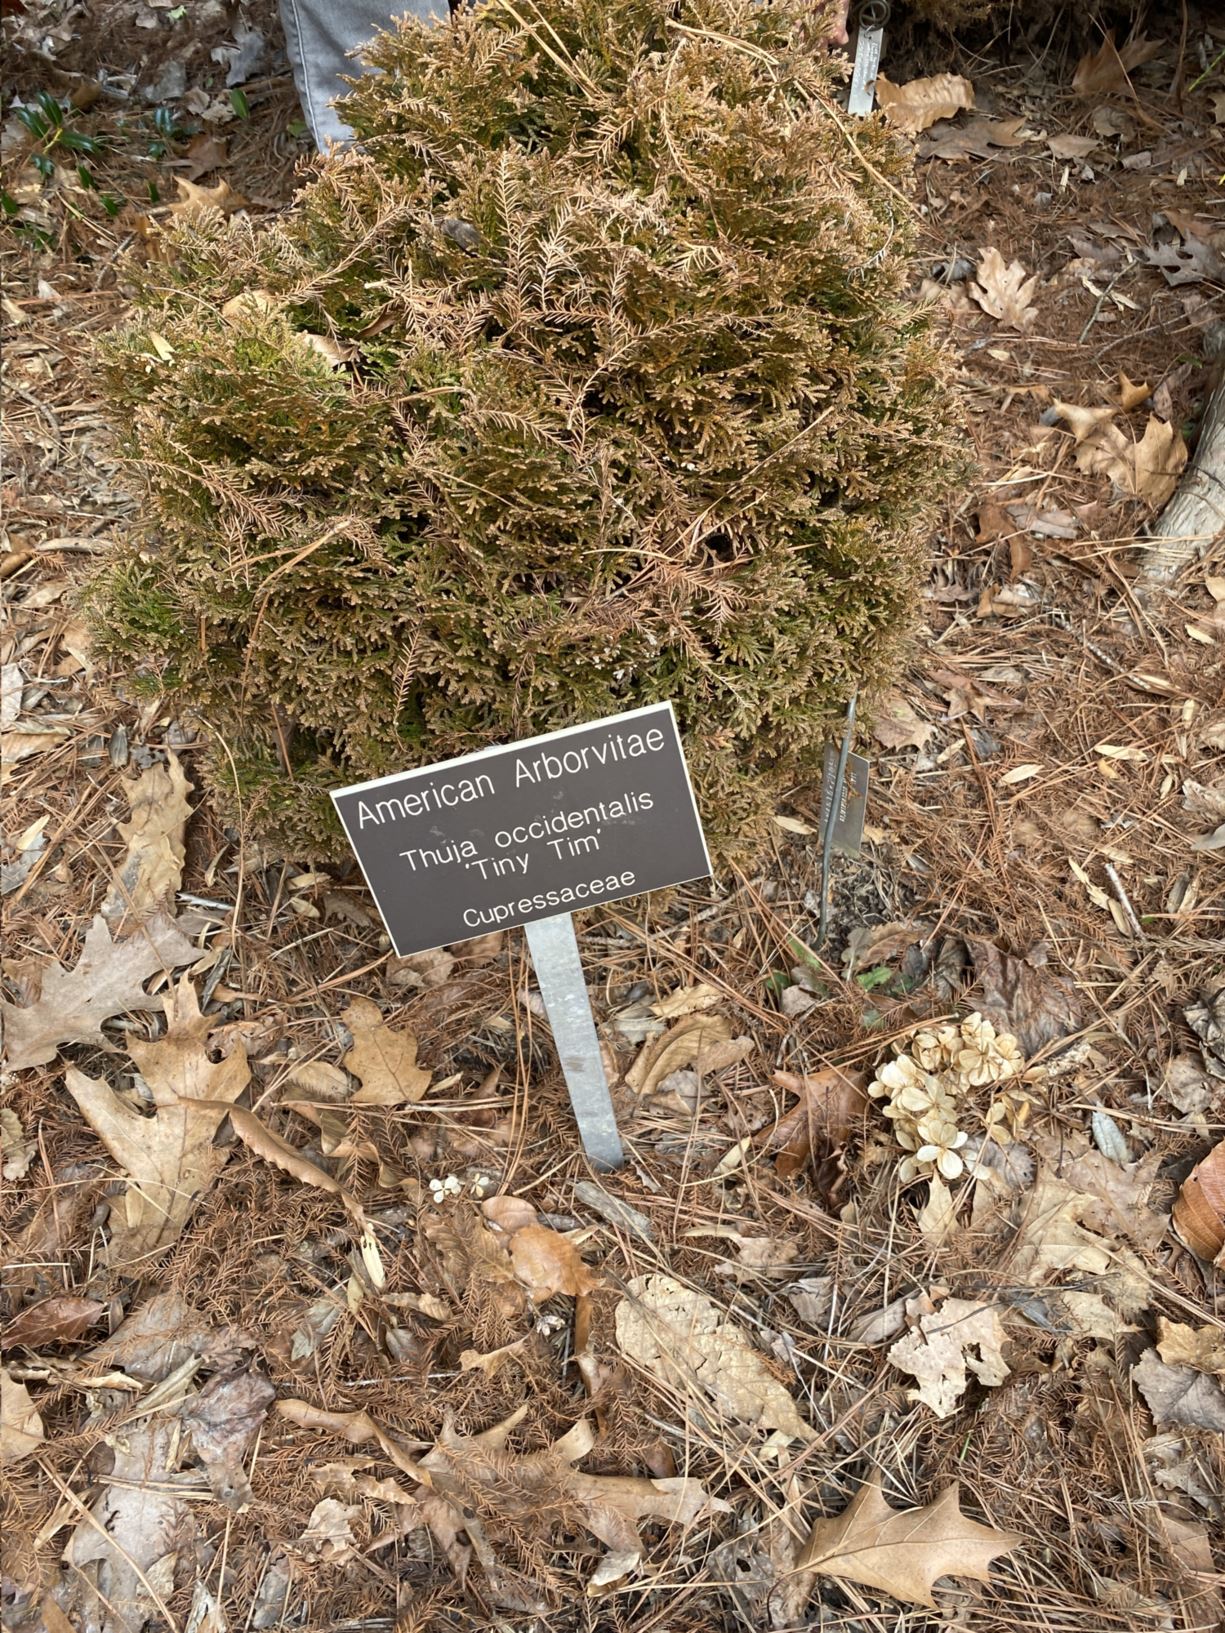 Thuja occidentalis 'Tiny Tim' - American arborivitae, eastern arborvitae, eastern white cedar